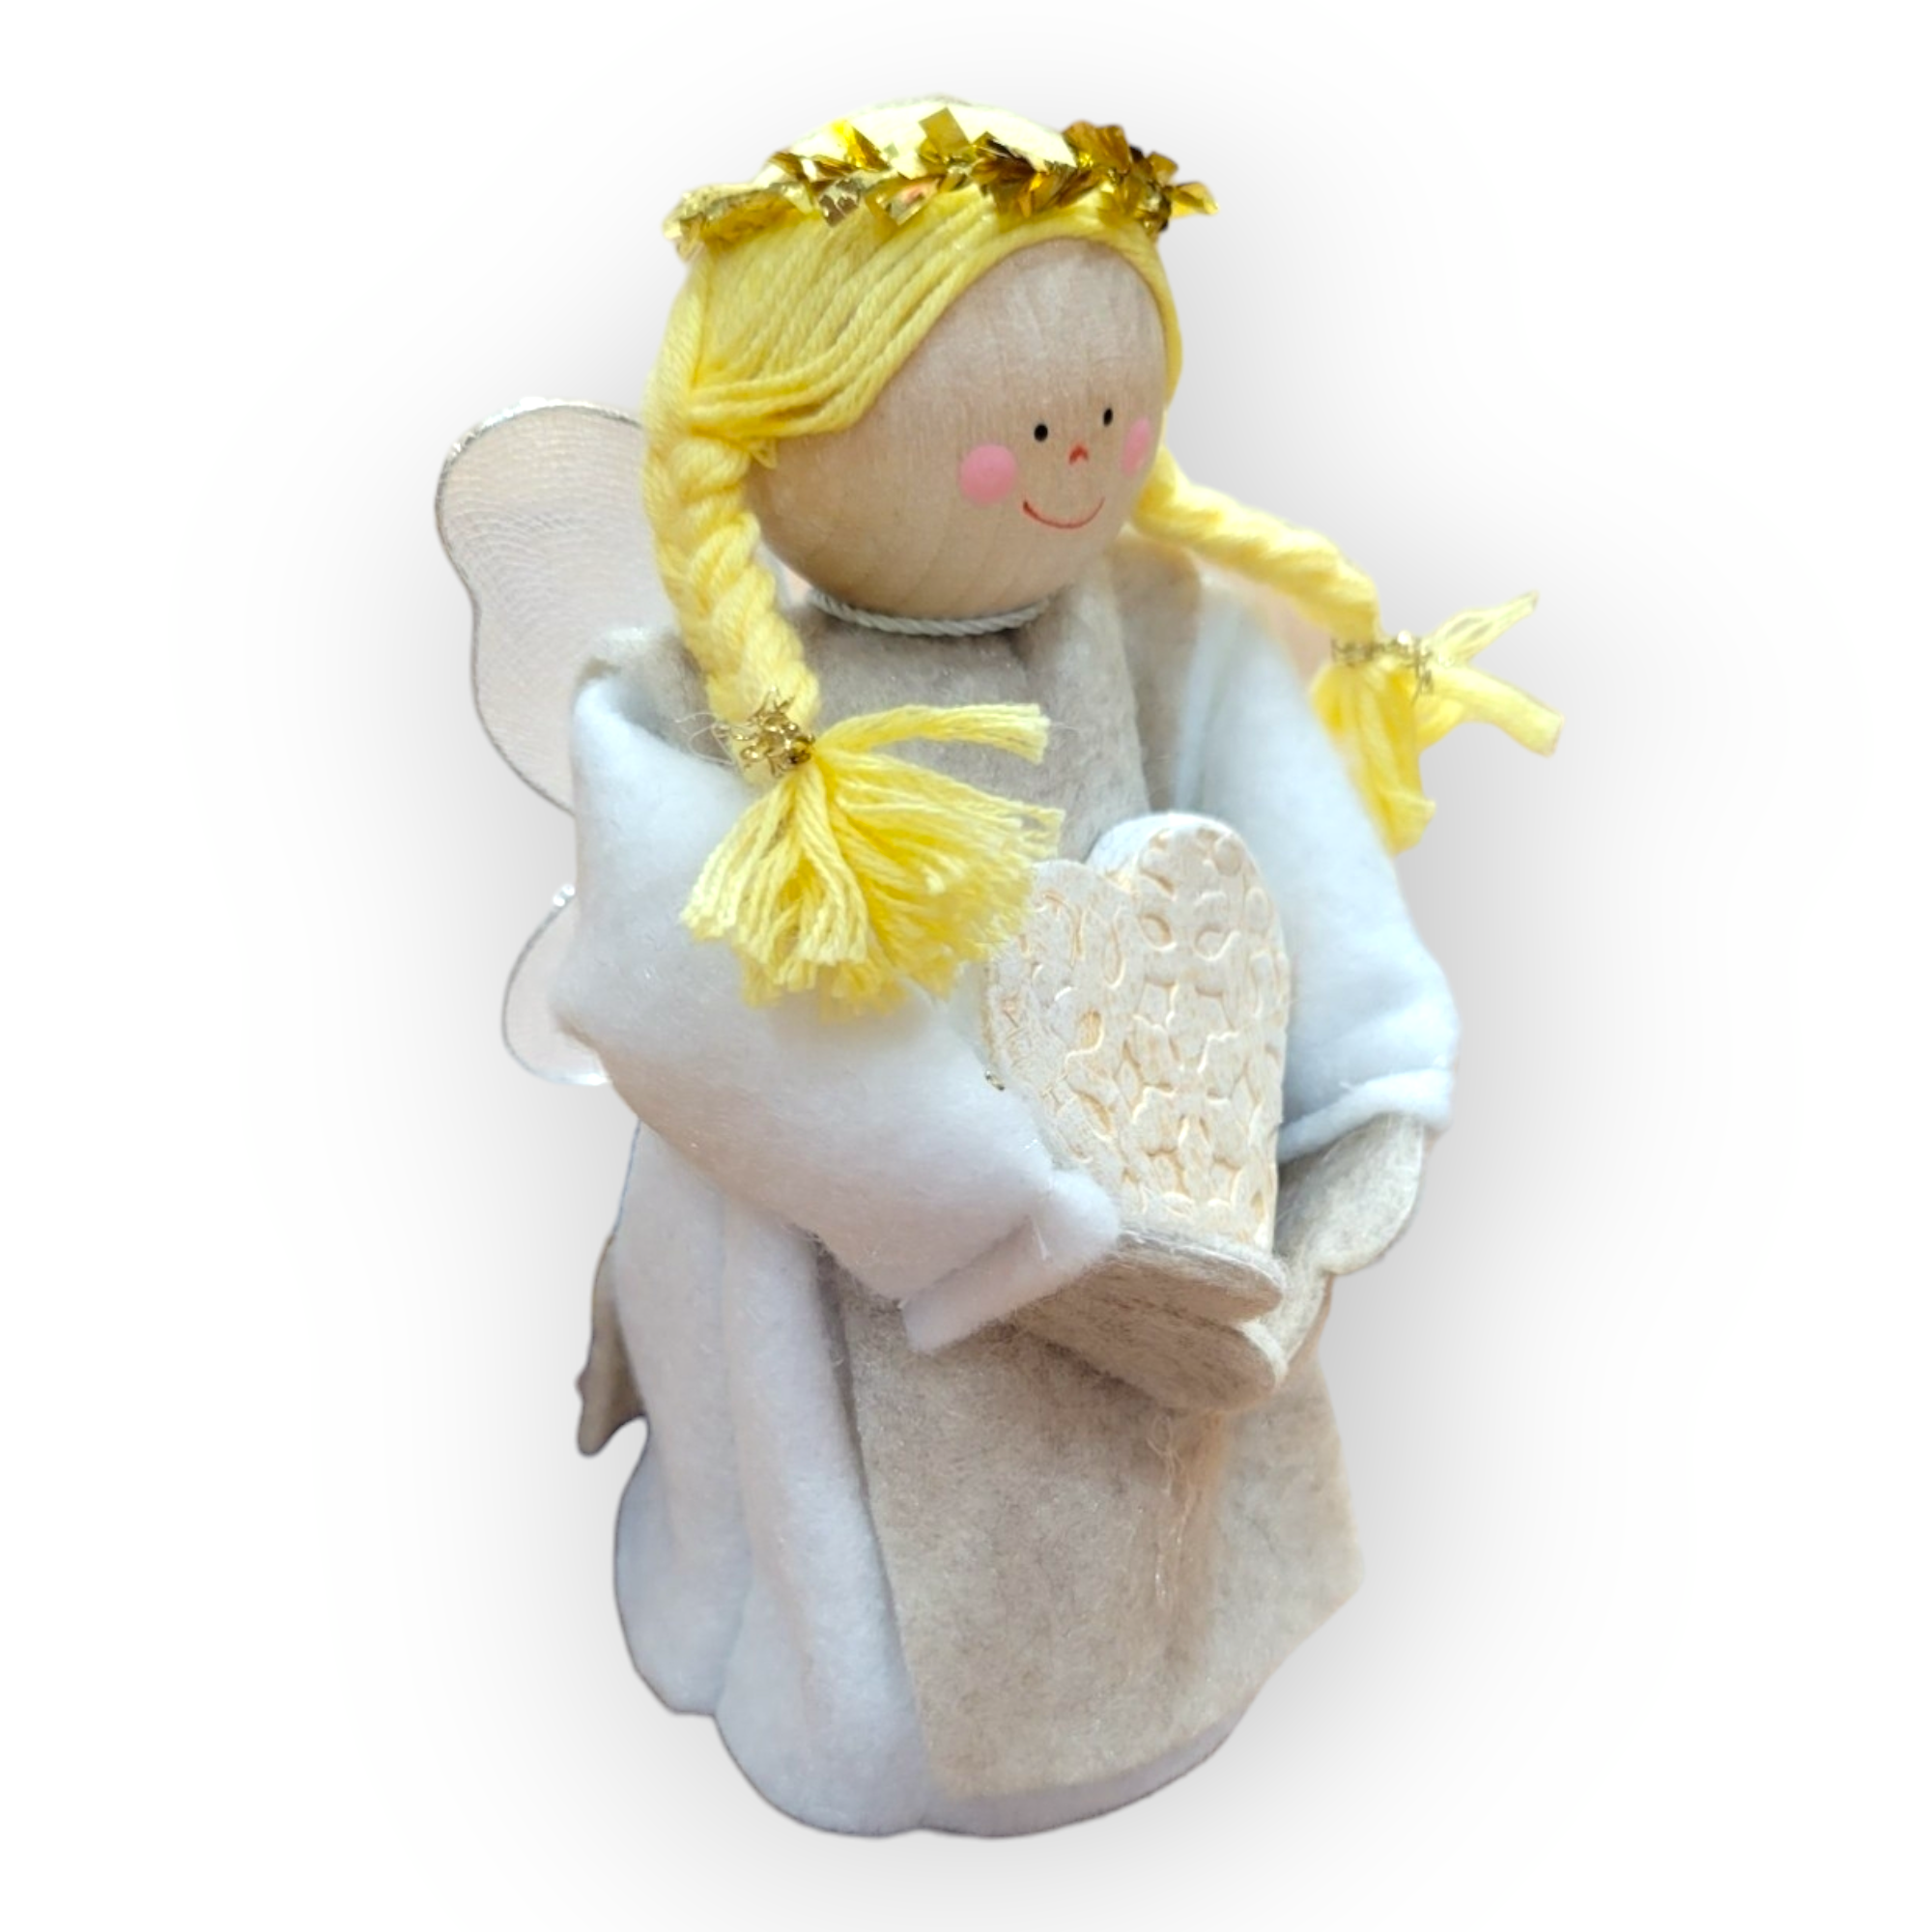 Figurine: Angel with Braids Holding Heart